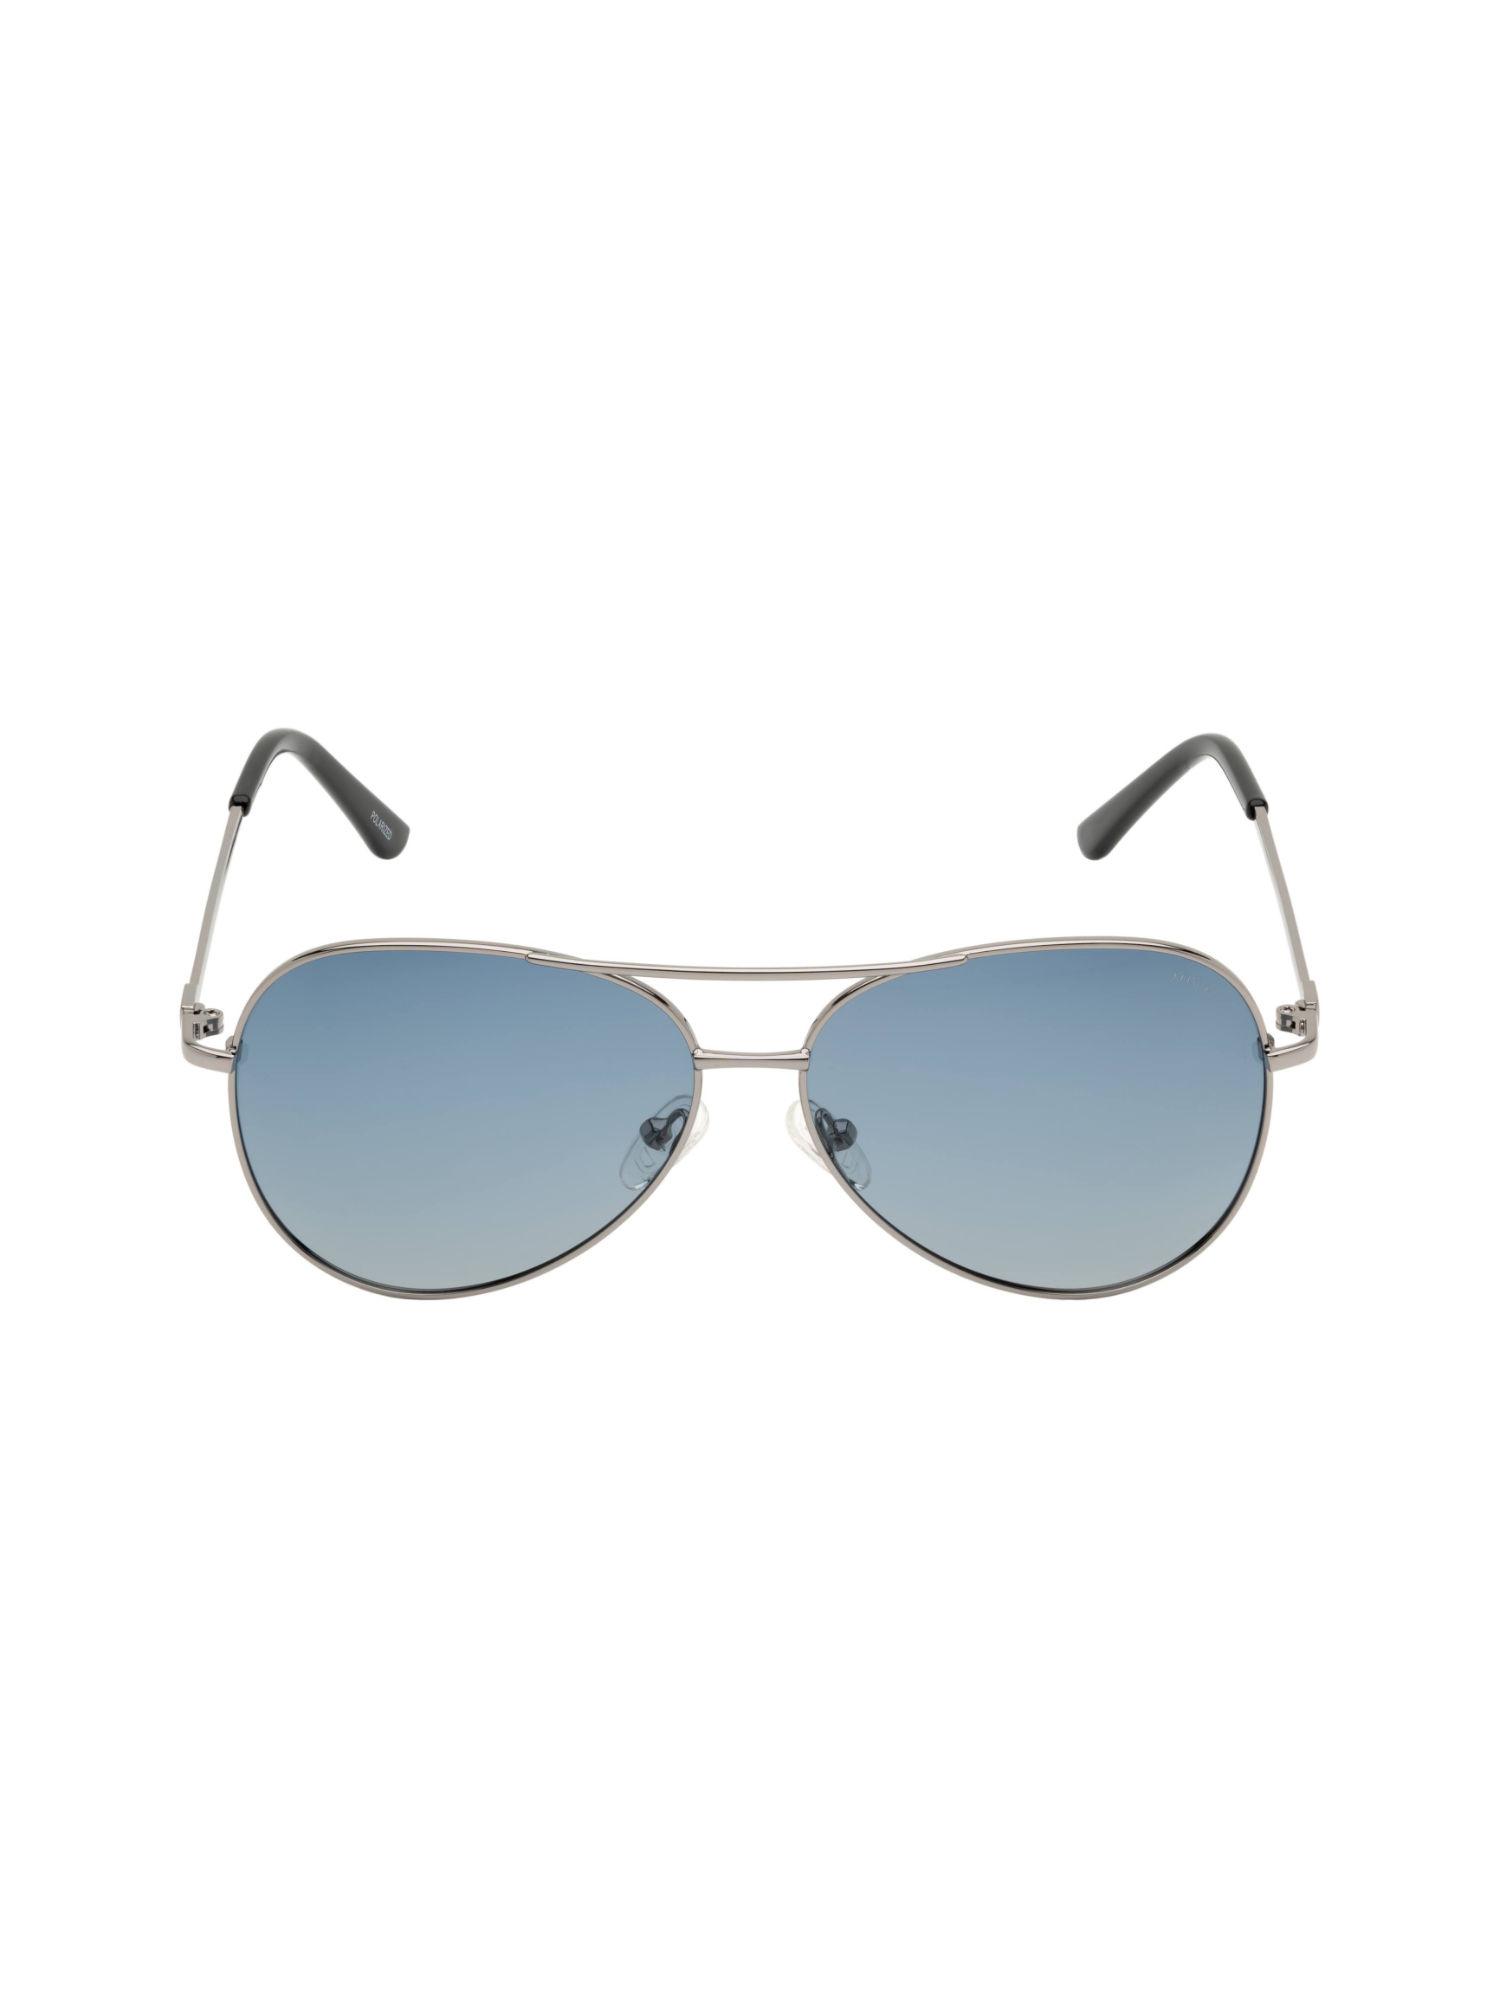 blue - aviator shape sunglasses - kst 22823